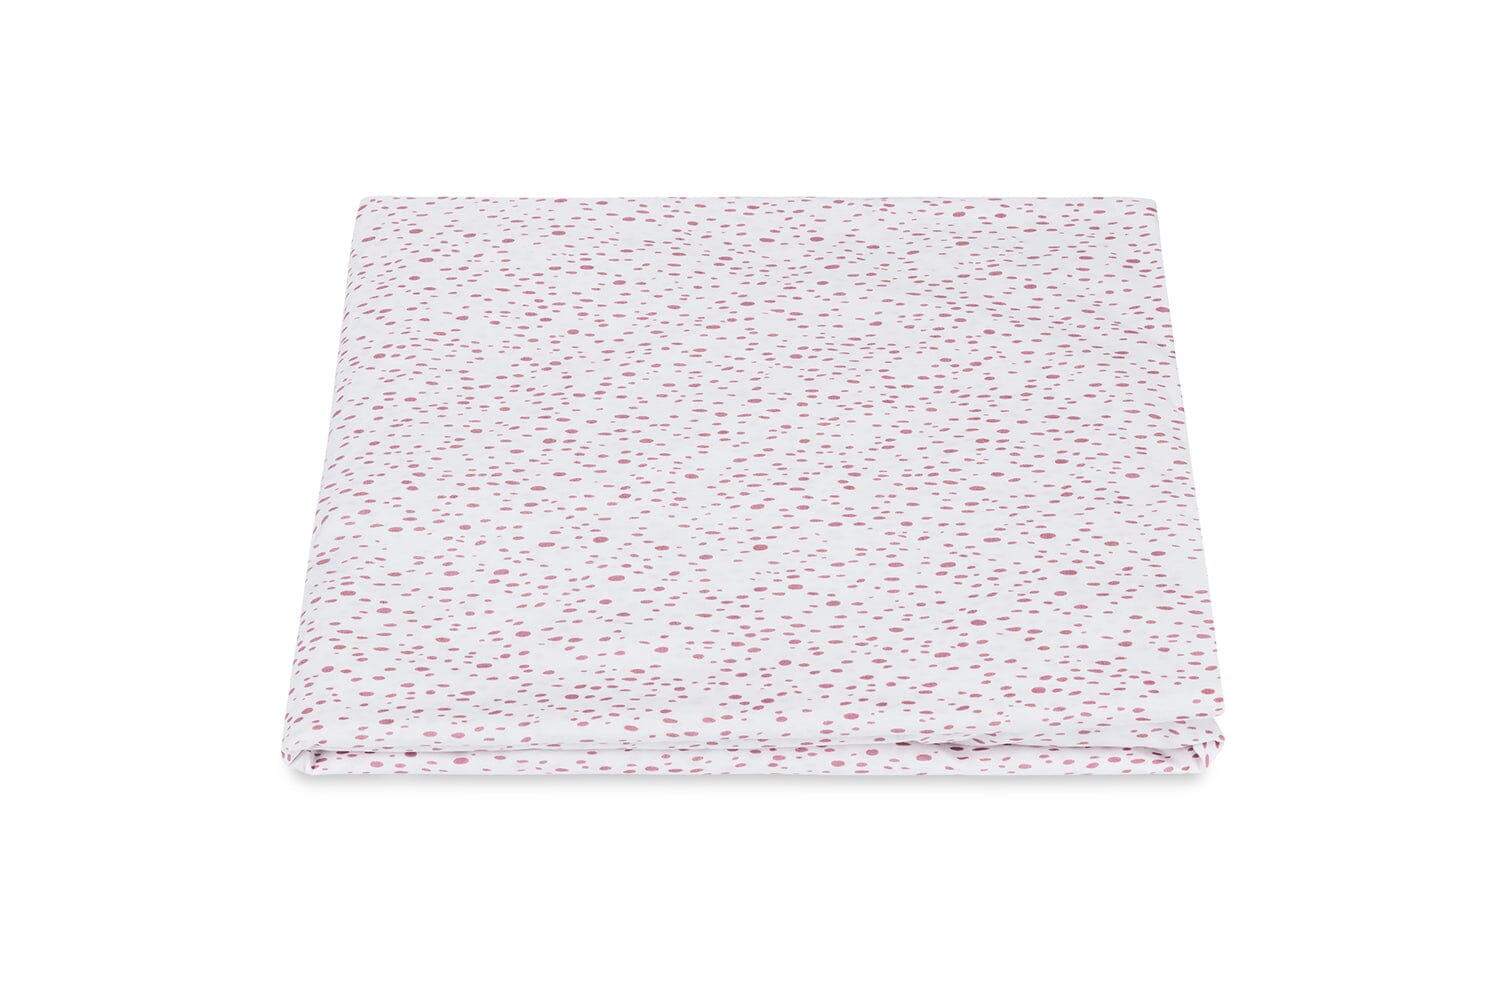 Fitted Sheet - Celine Pink Bedding by Matouk Schumacher 